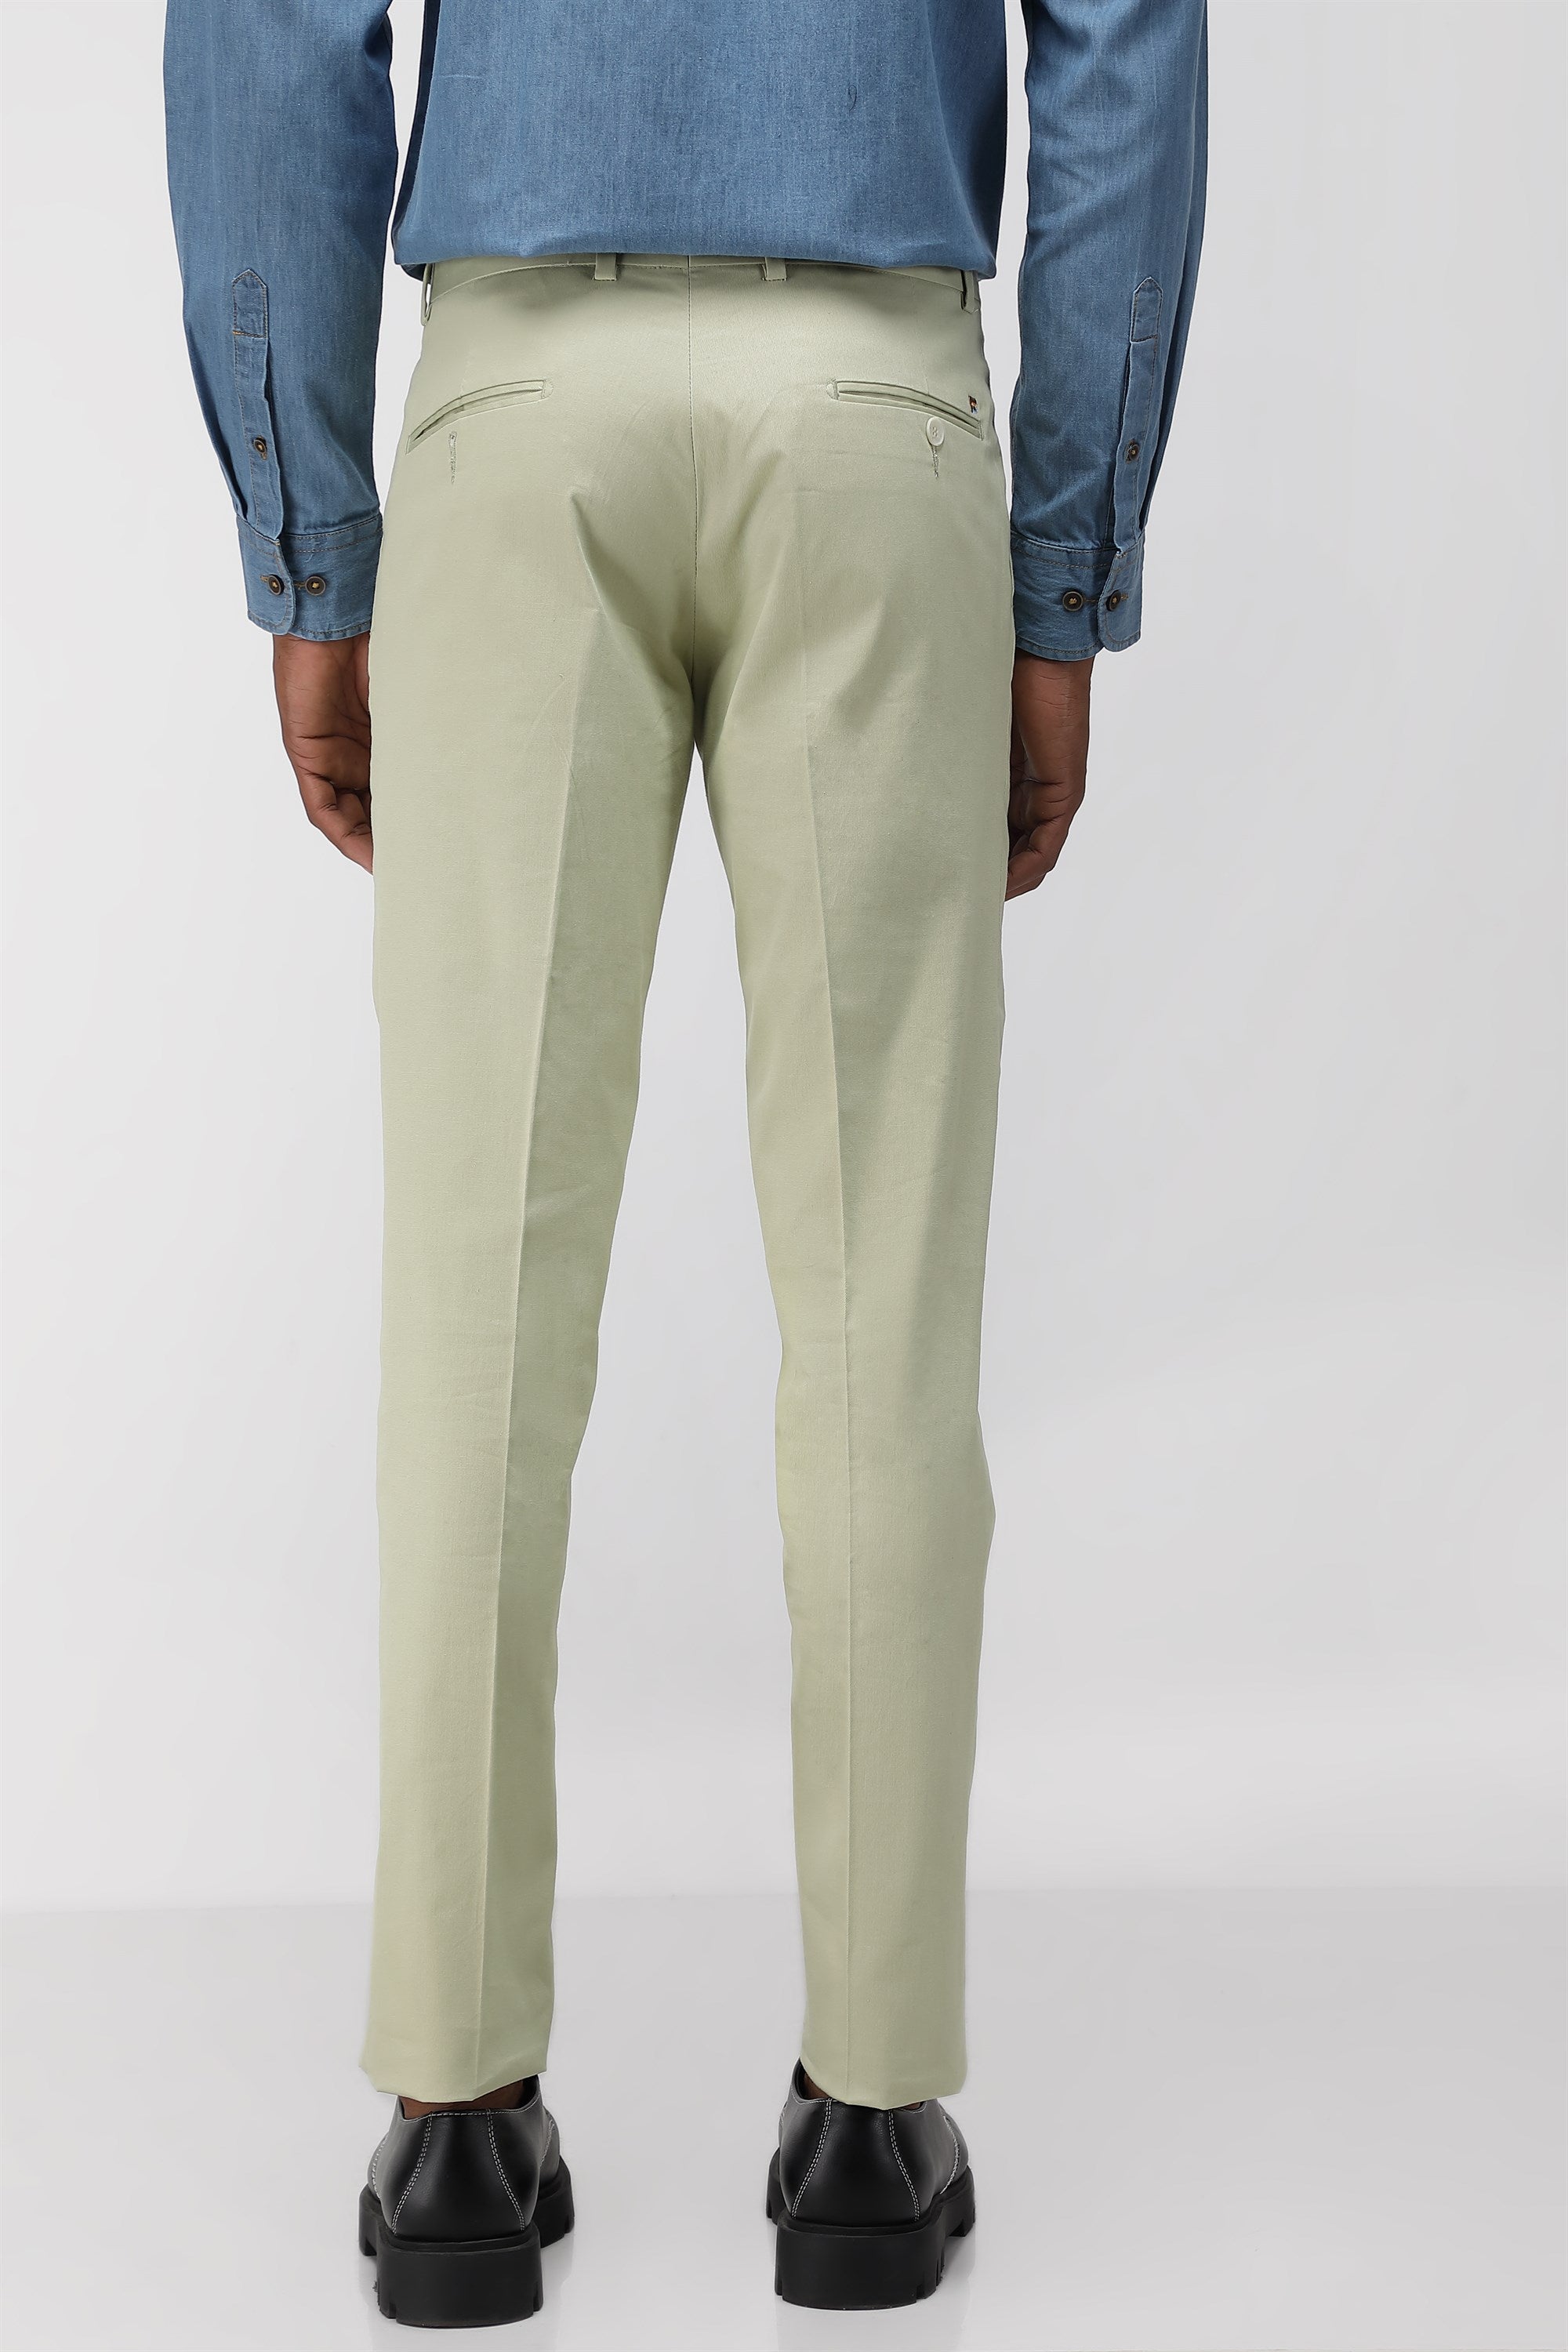 Buy Ruggers Dark Beige Slim Fit Cotton Trousers for Men Online  Tata CLiQ